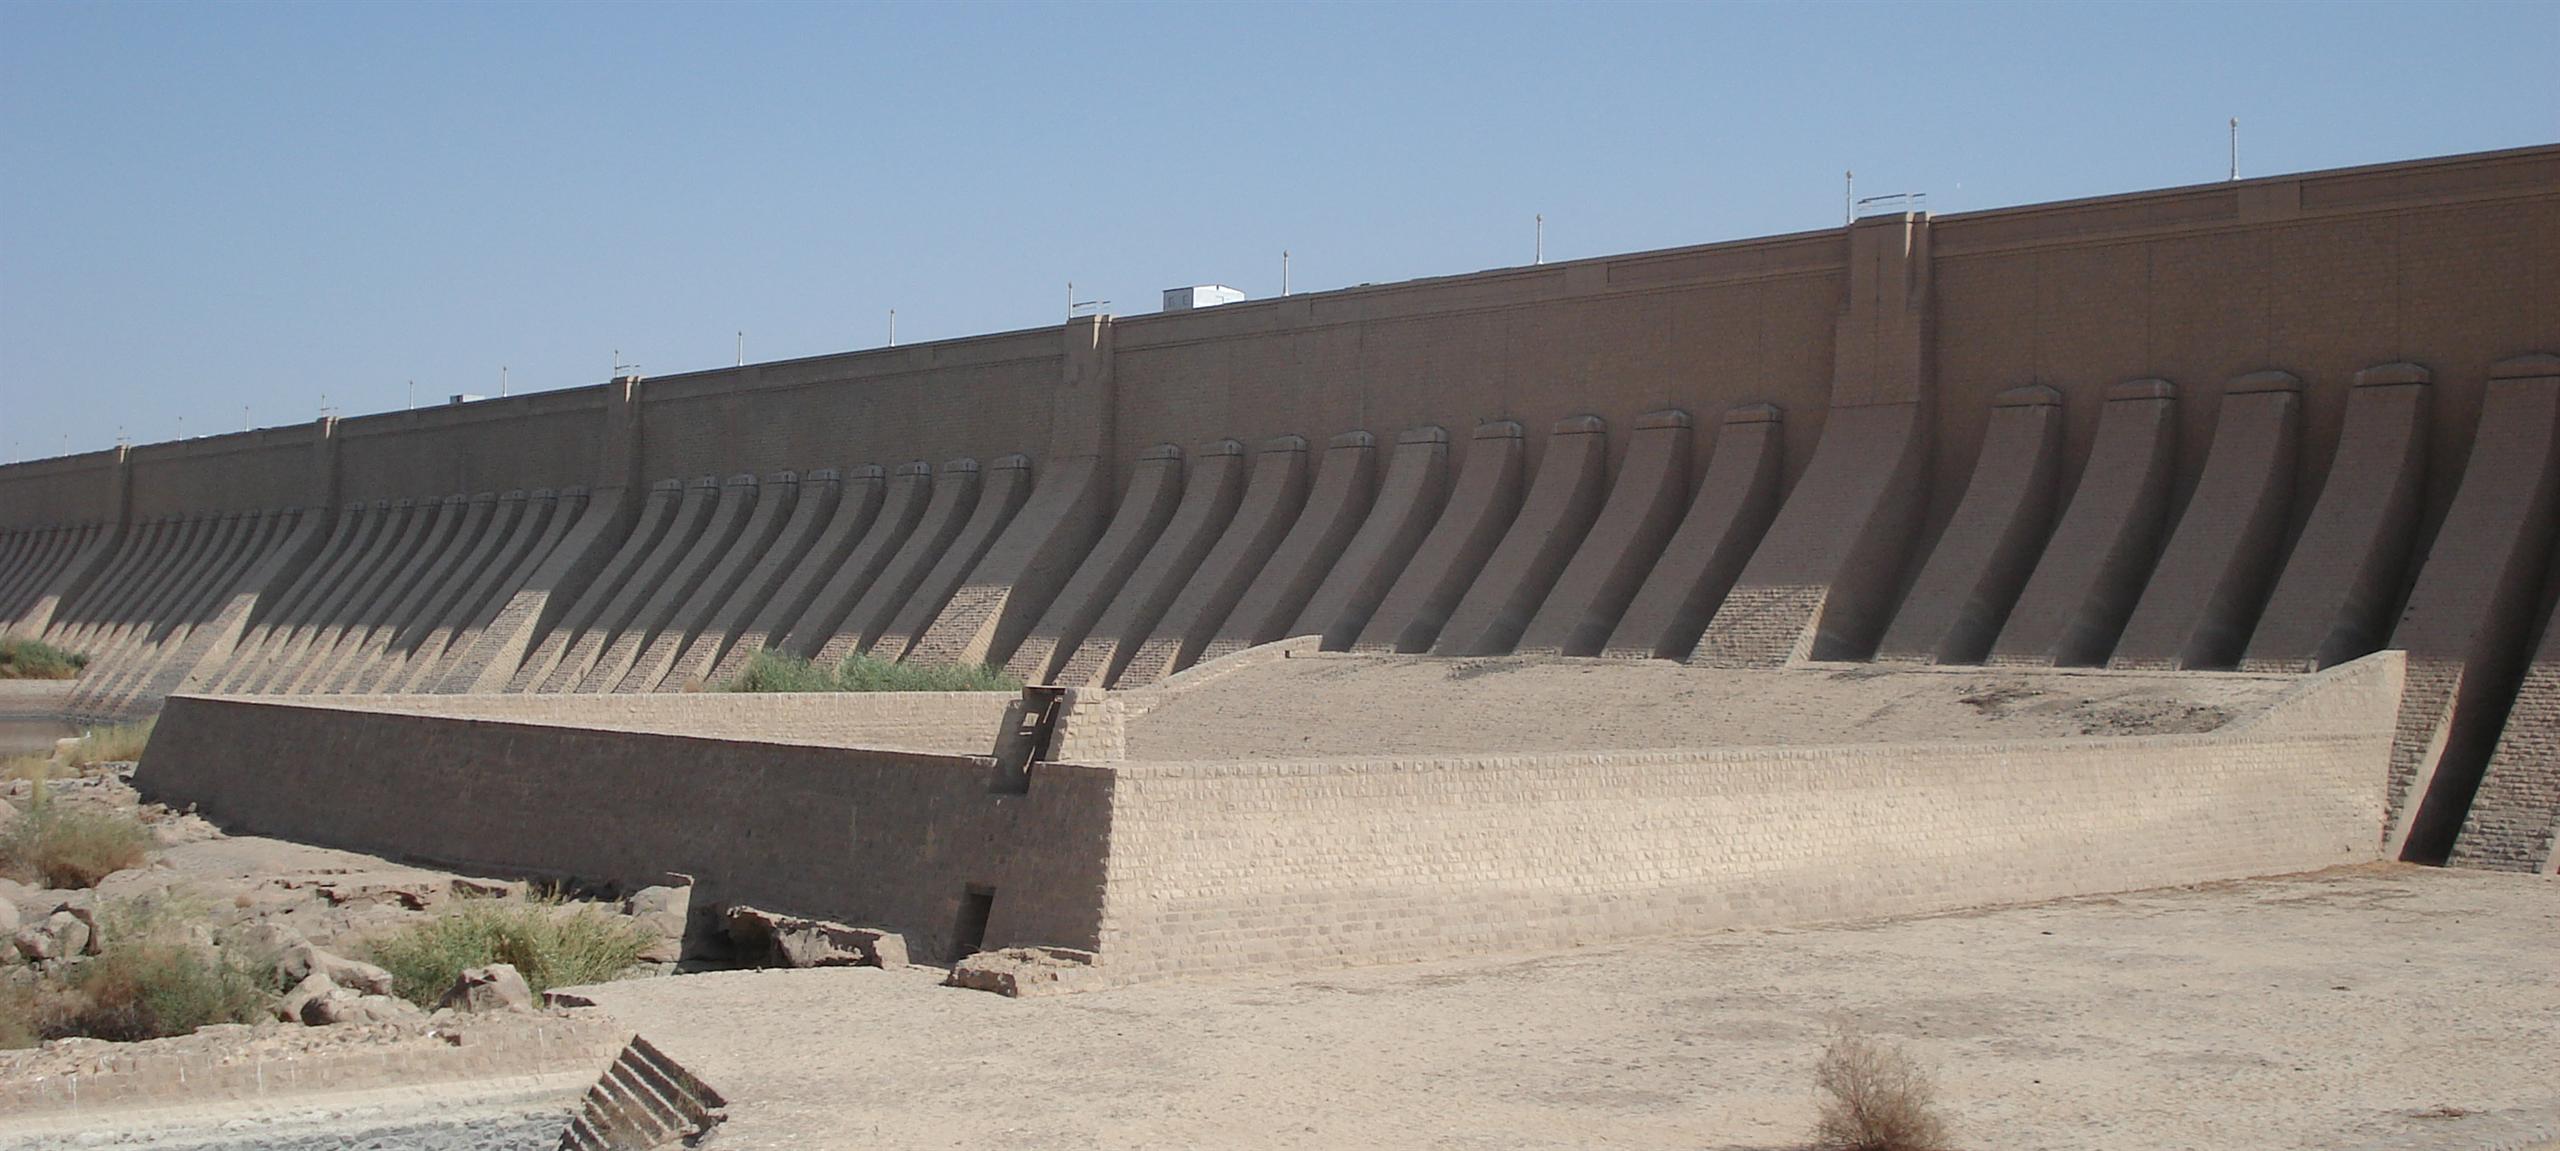 The original Aswan Dam in Egypt